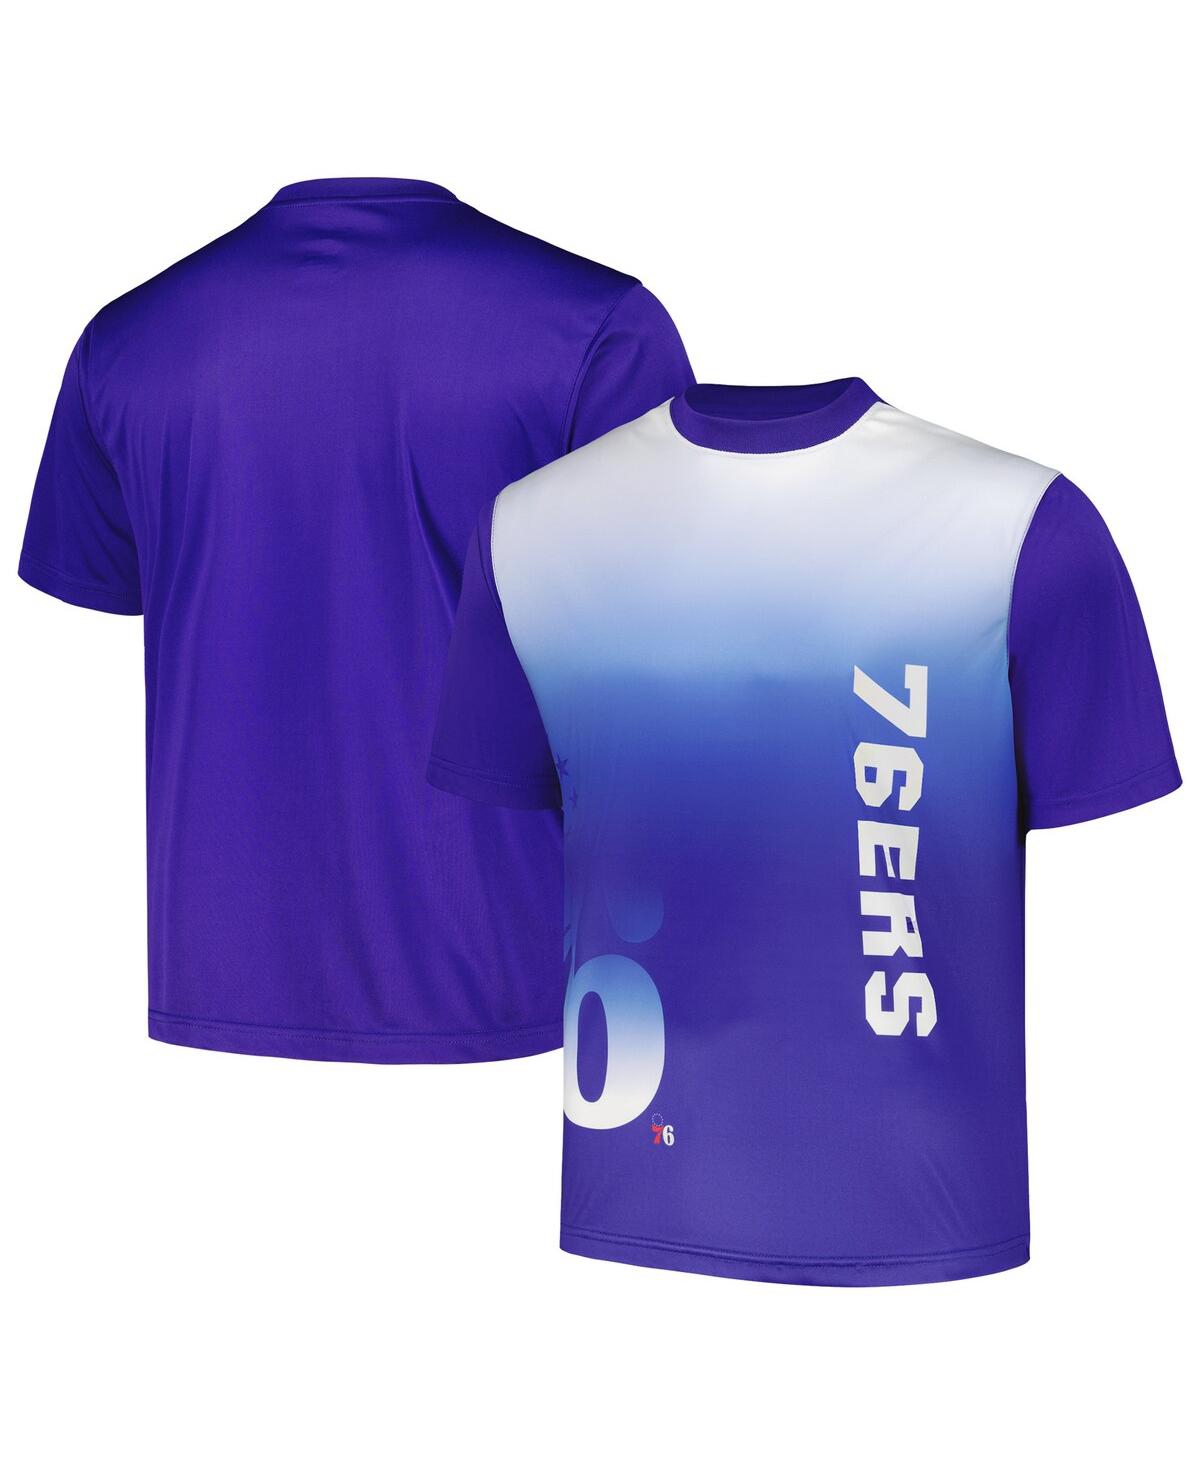 Shop Fanatics Men's Royal Philadelphia 76ers Sublimated T-shirt